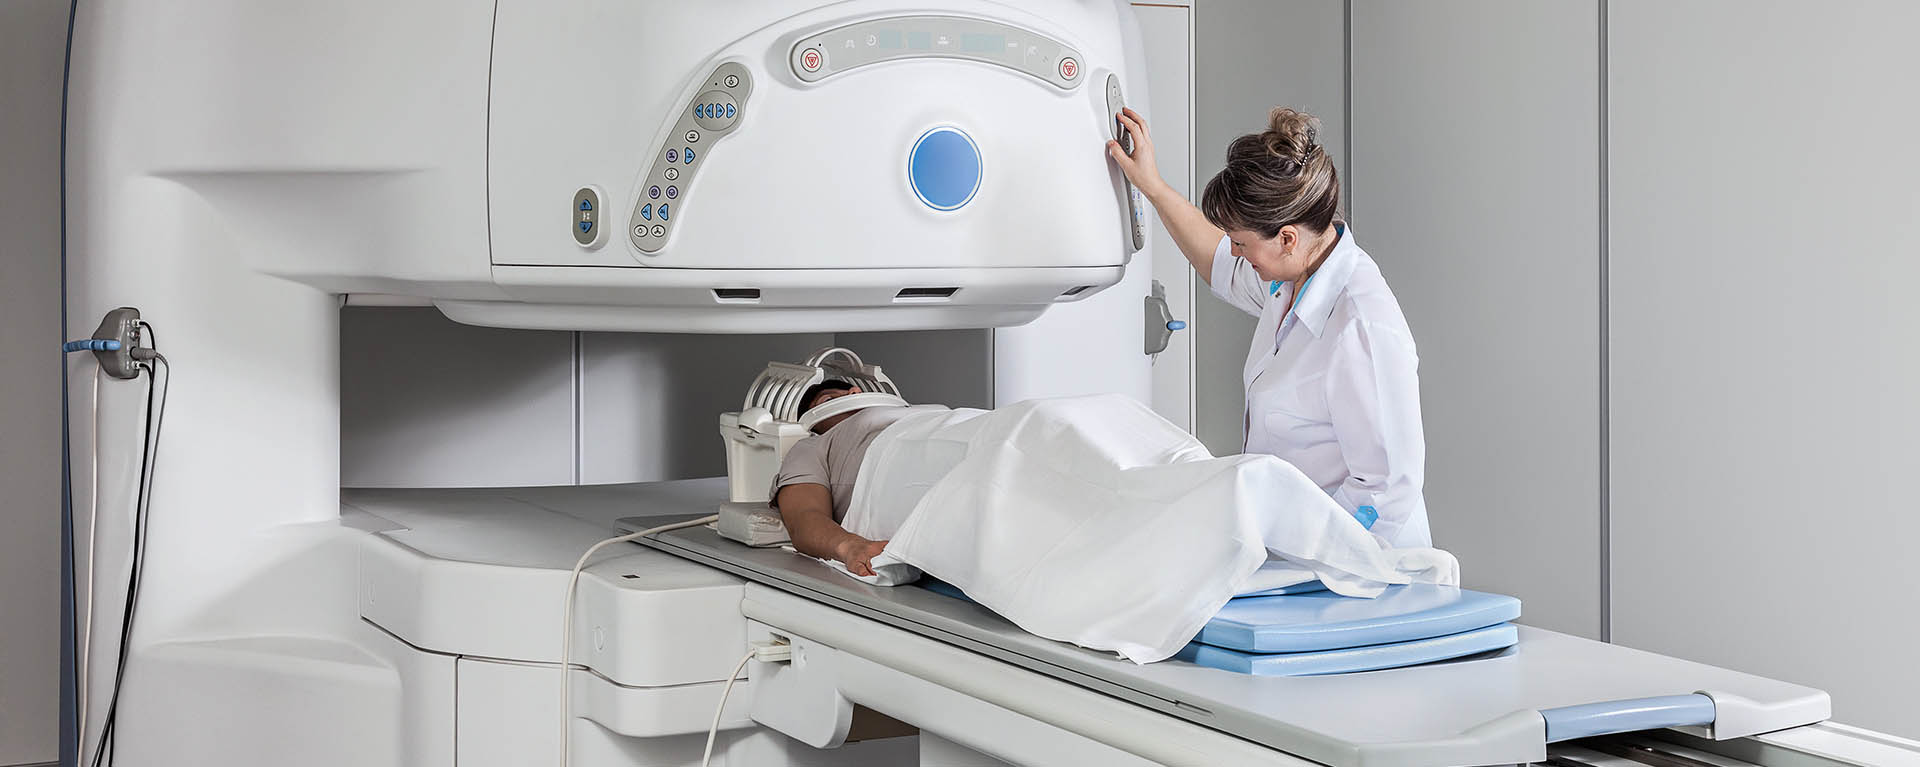 MRI machine operator with a patient